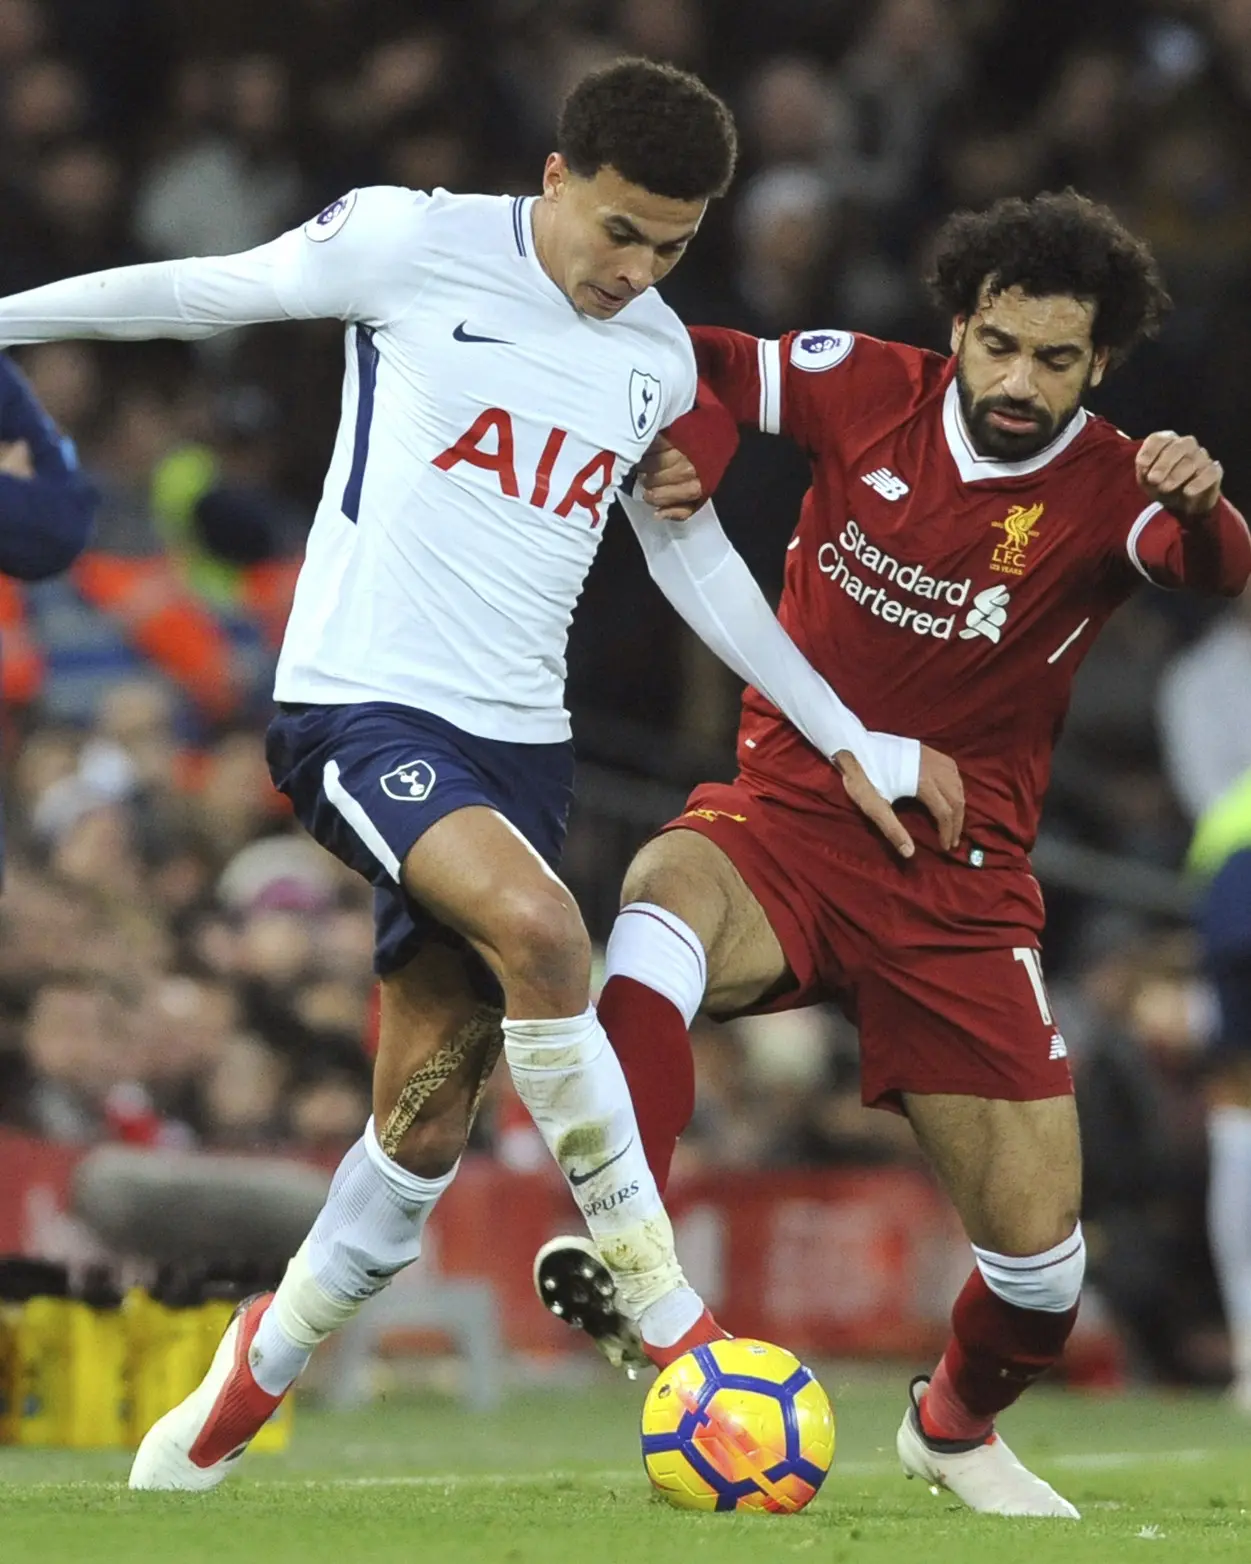 Pemain Tottenham, Dele Alli (kiri) berusaha melewati adangan pemain Liverpool, Mohamed Salah pada laga di Anfield. Liverpool bermain imbang 2-2 dengan Tottenham. (AP/Rui Vieira)